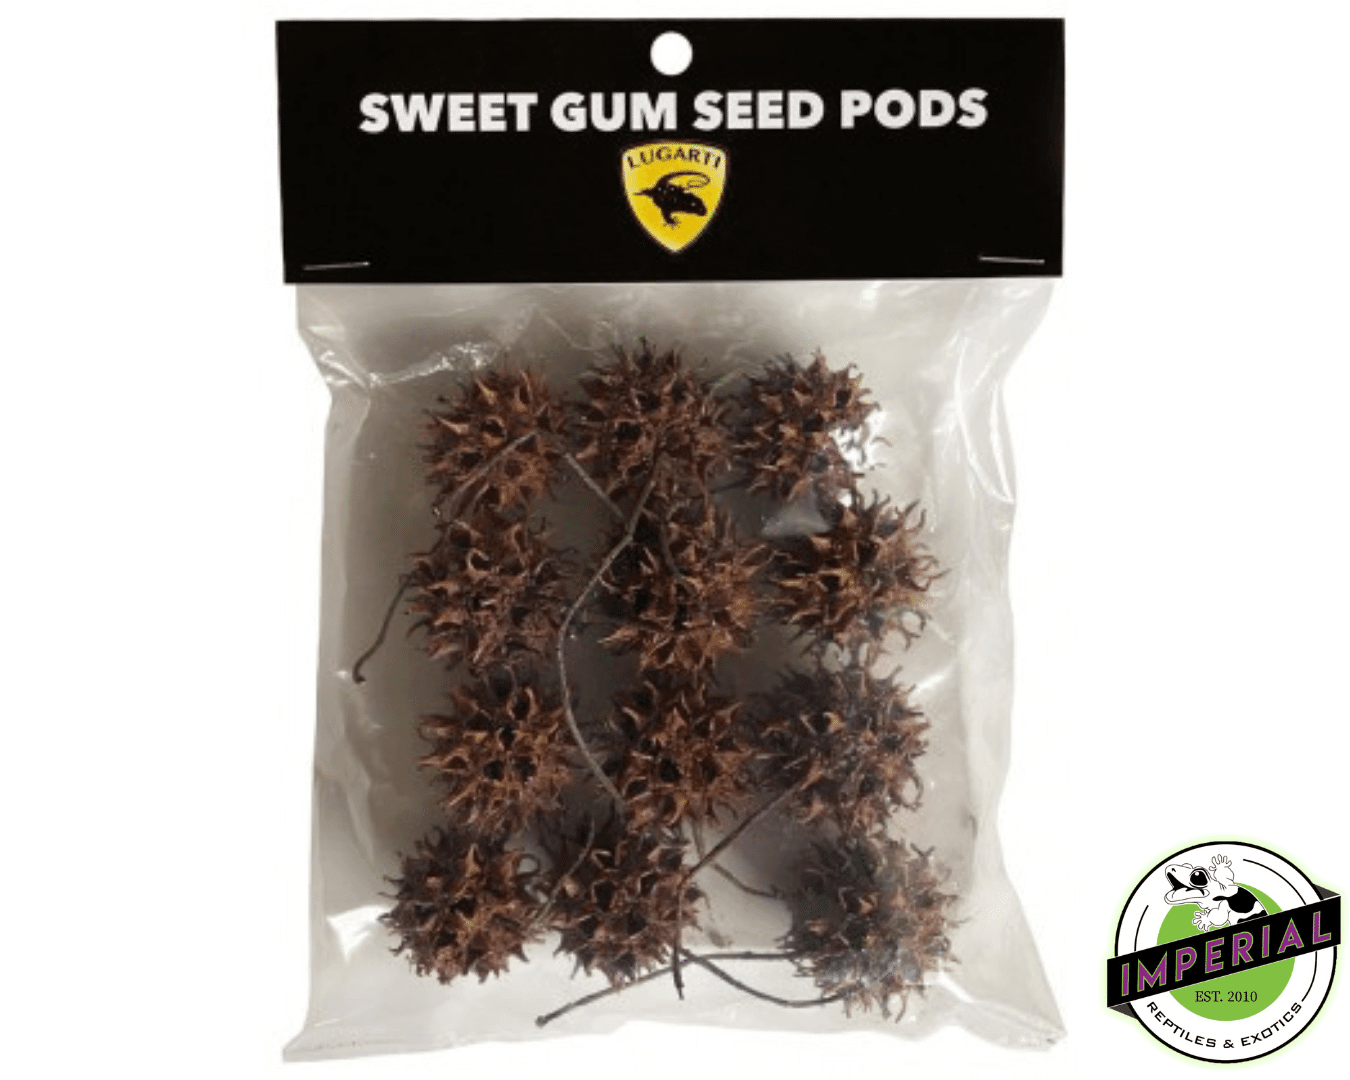 buy gum seed pods for sale online at cheap prices, bio active vivarium supplies